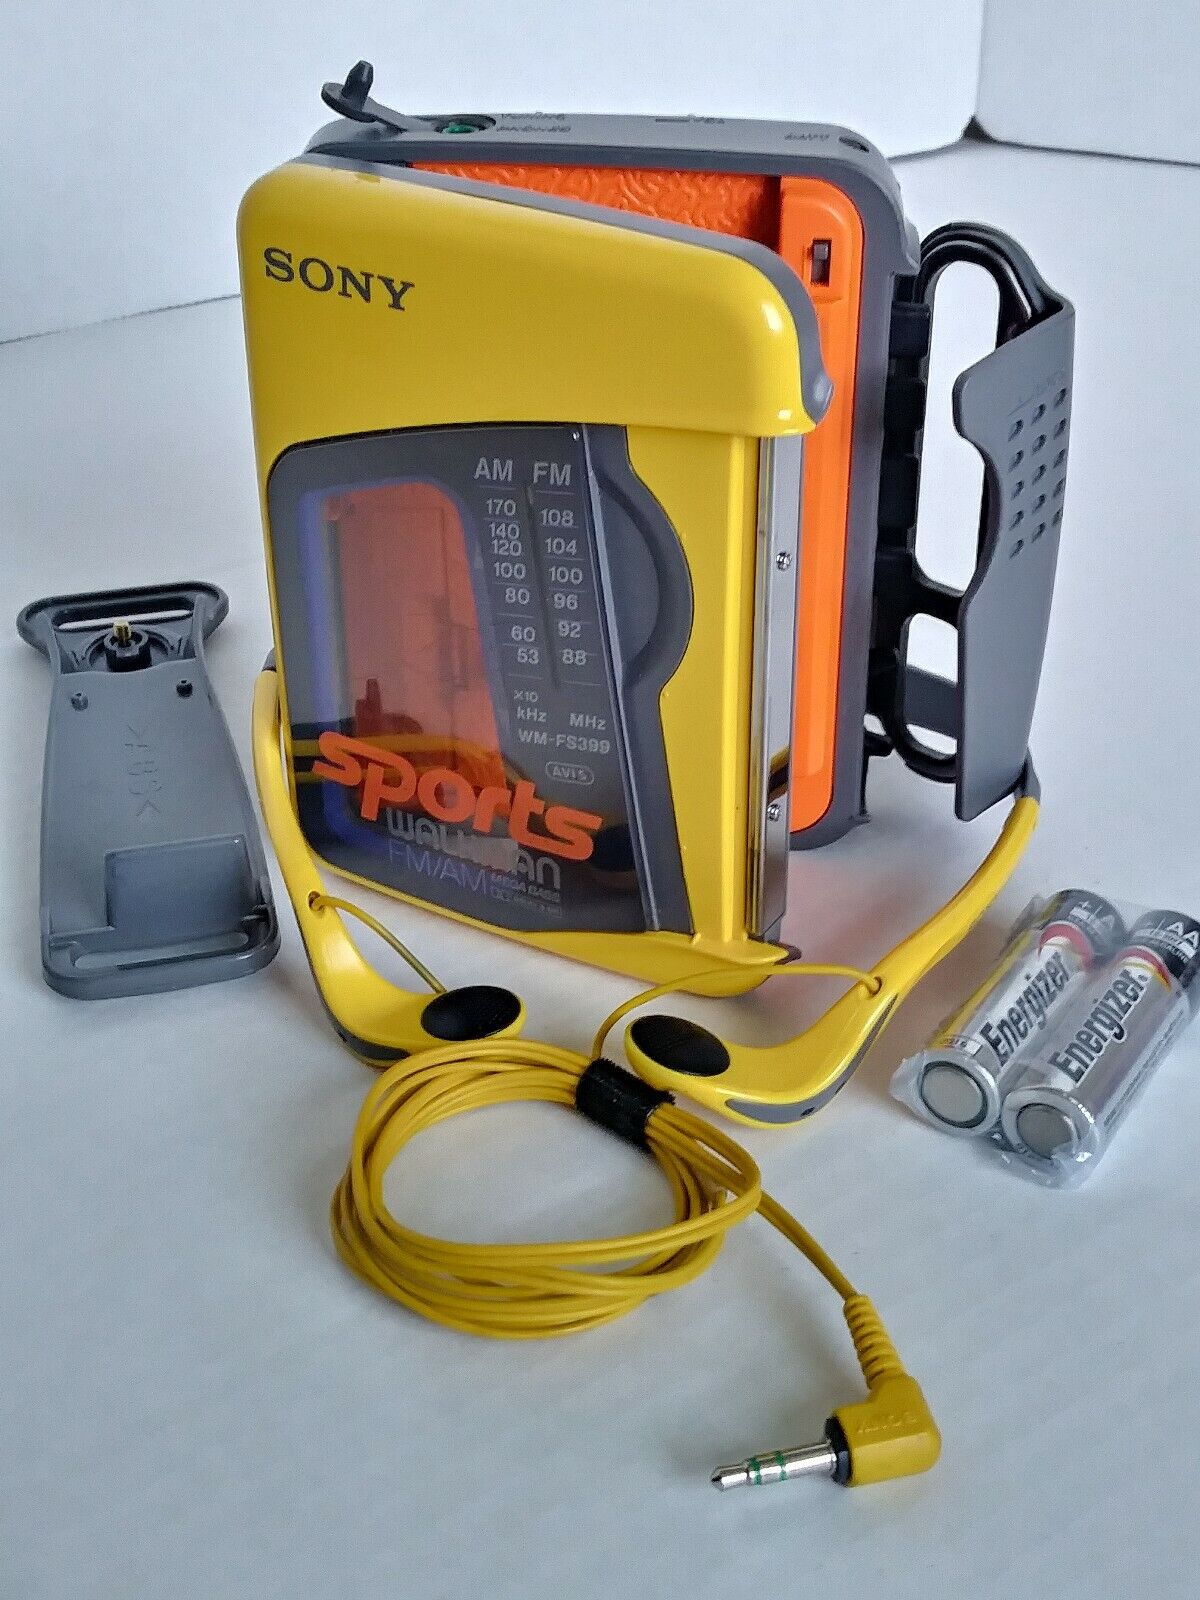 Sony Portable Cassette Player - WMFS399 for sale online | eBay